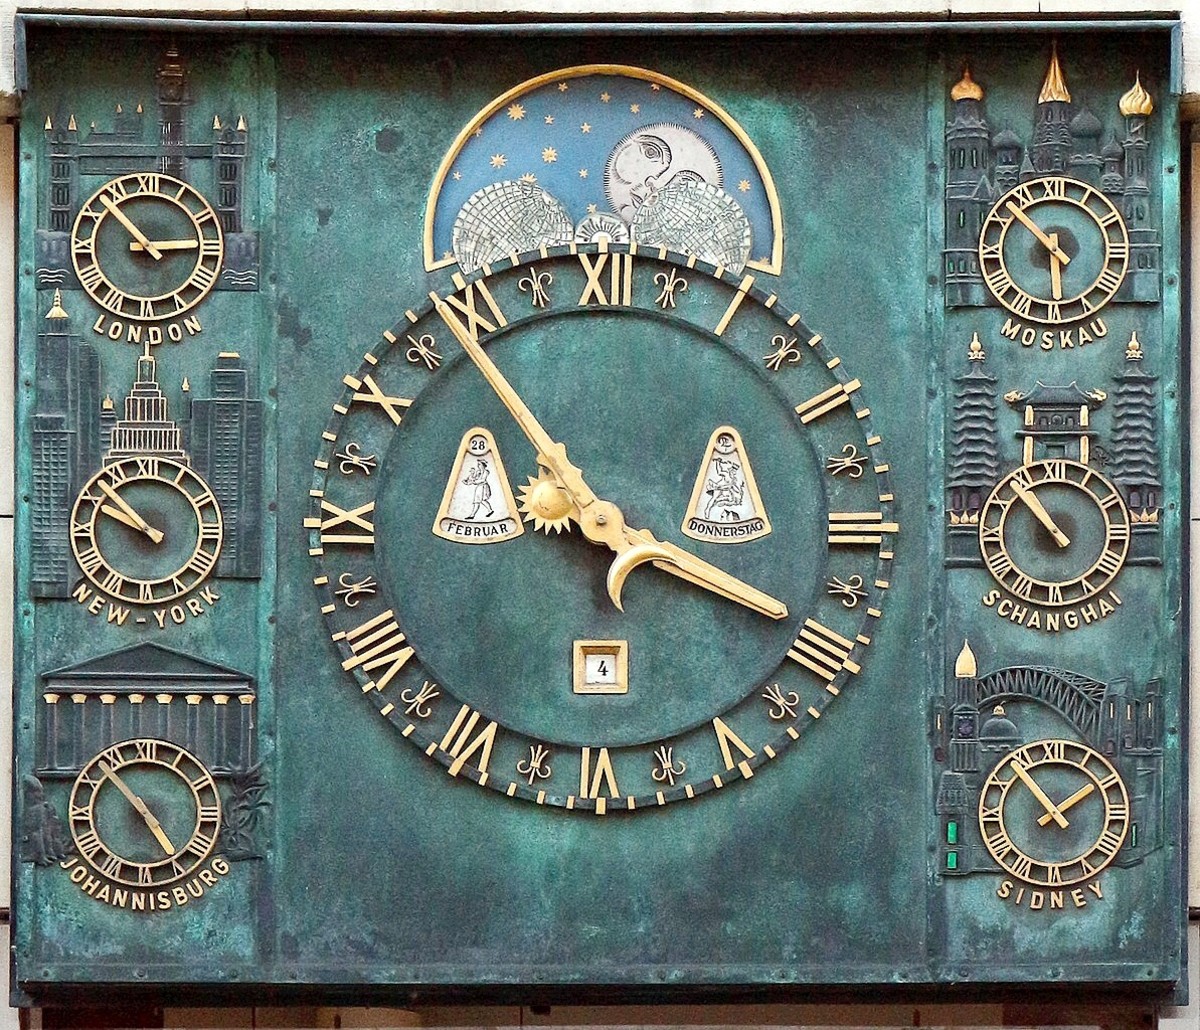 A world clock